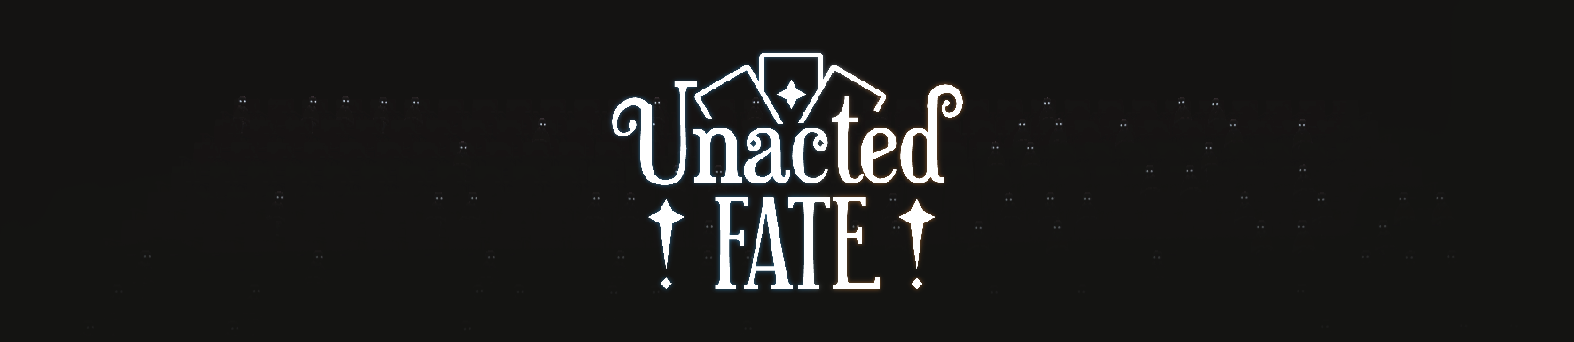 Unacted Fate (Prototype)